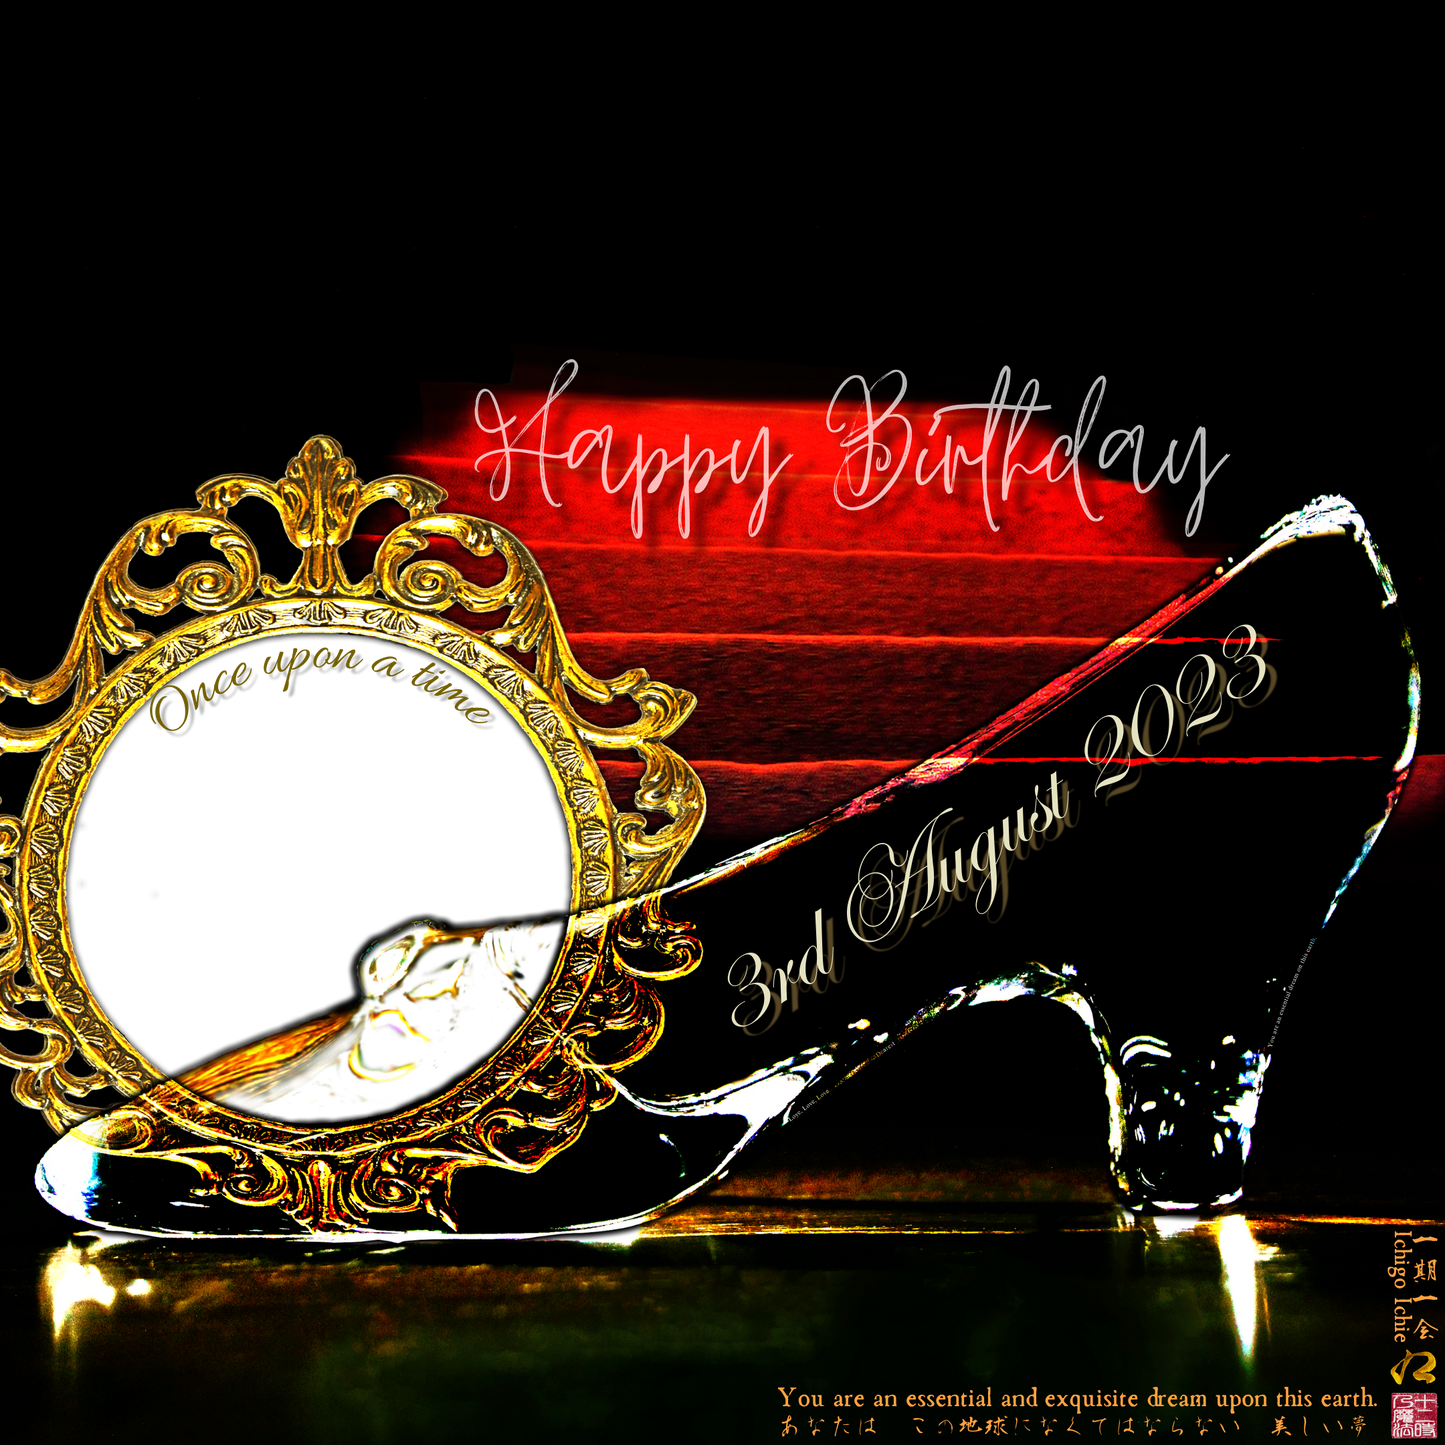 Happy Birthday Glass Slipper "Ichigo Ichie" 3rd August 2023 the Left (1-of-1) NFT Art